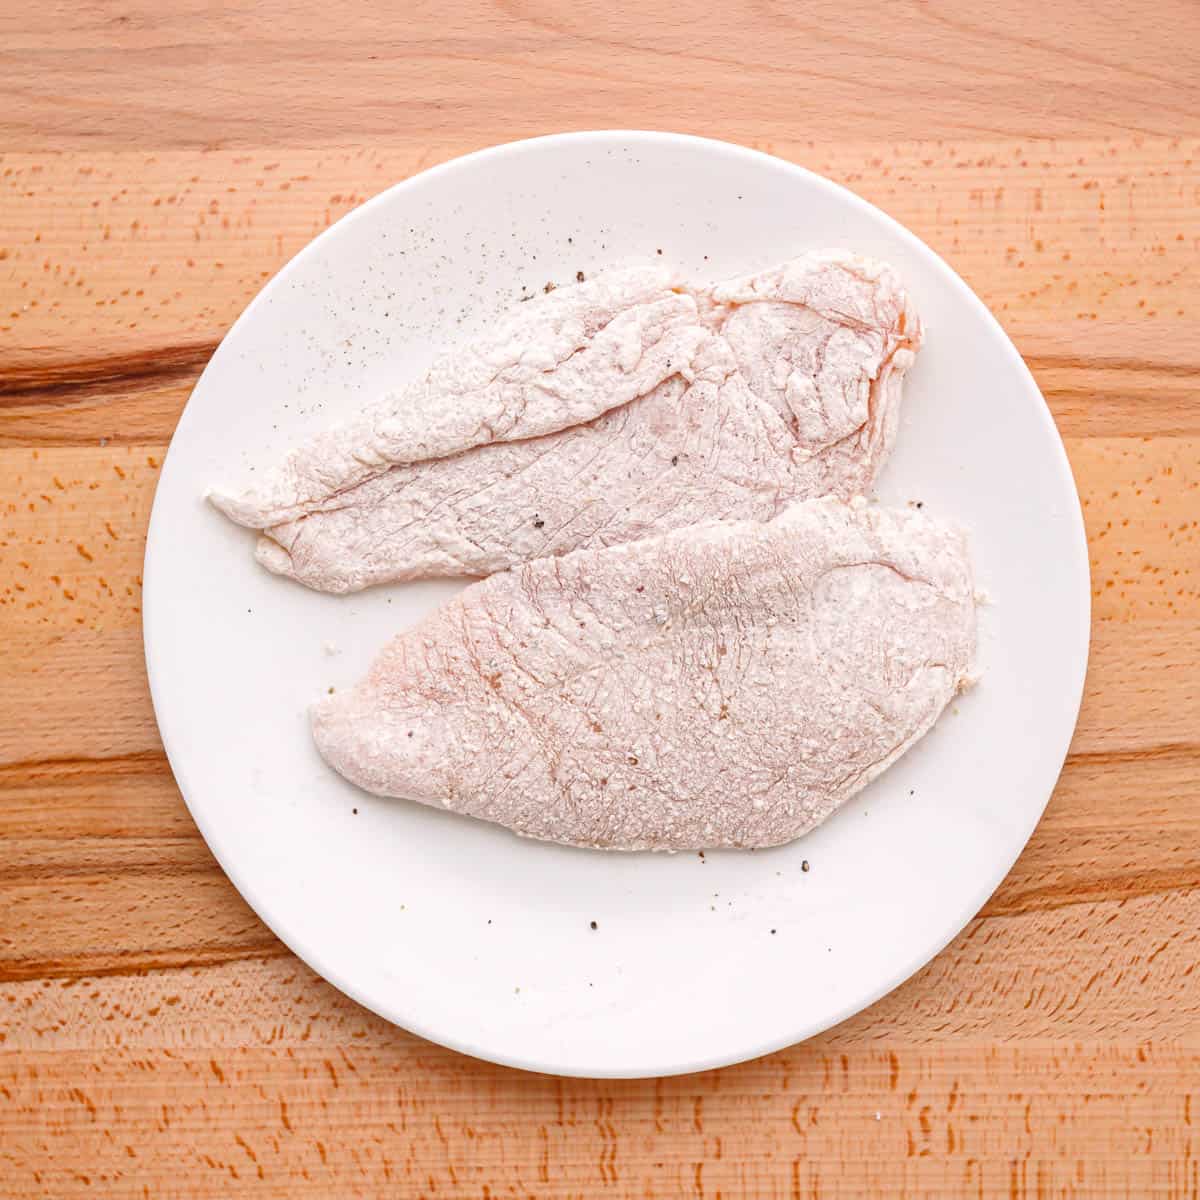 dredge the chicken breast in flour.